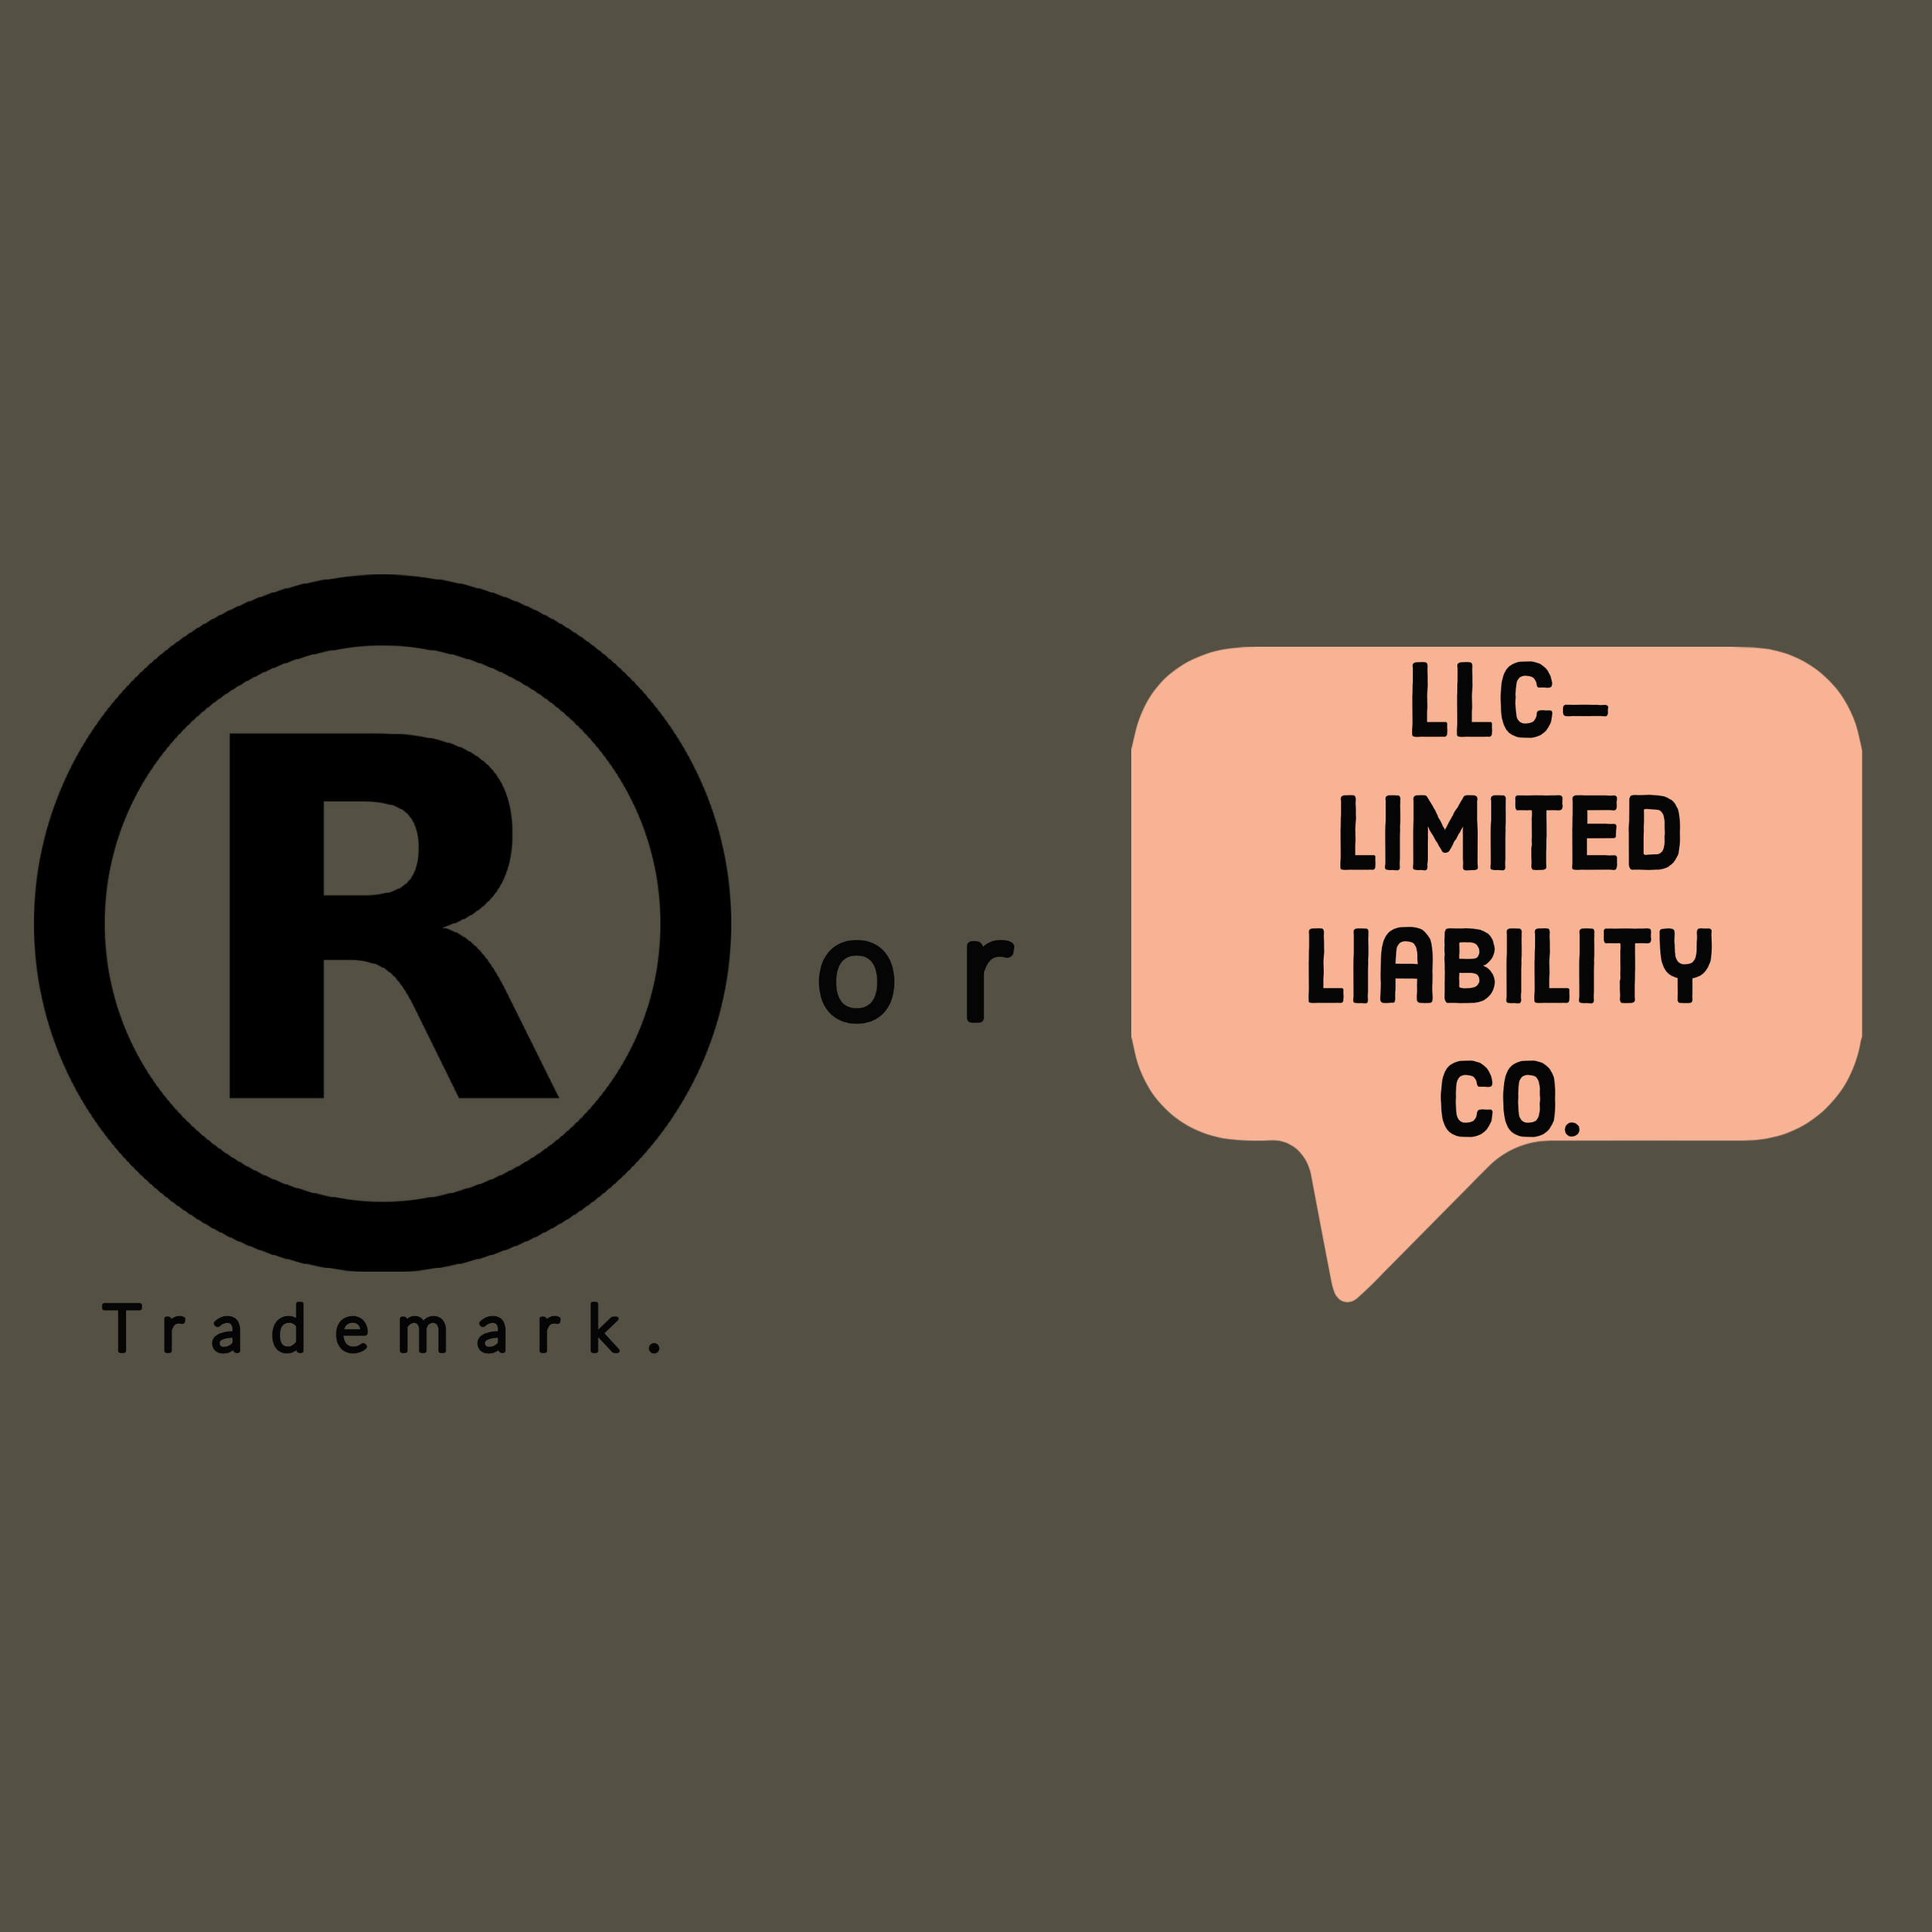 LLC First or Trademark?